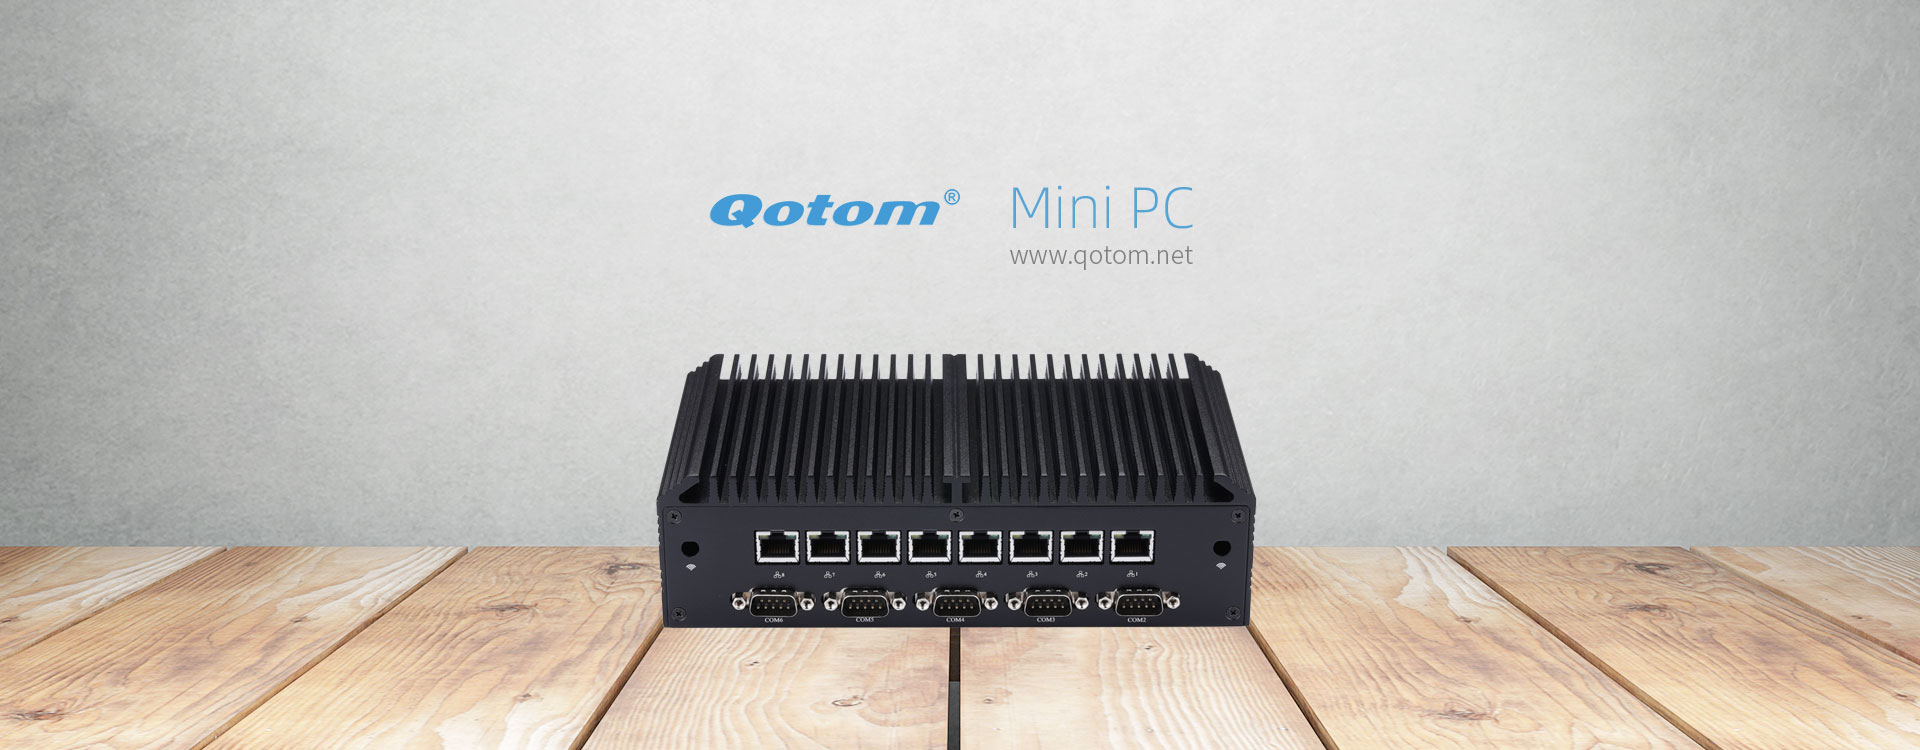 Mini PC Q515G6-Qotom Mini PC